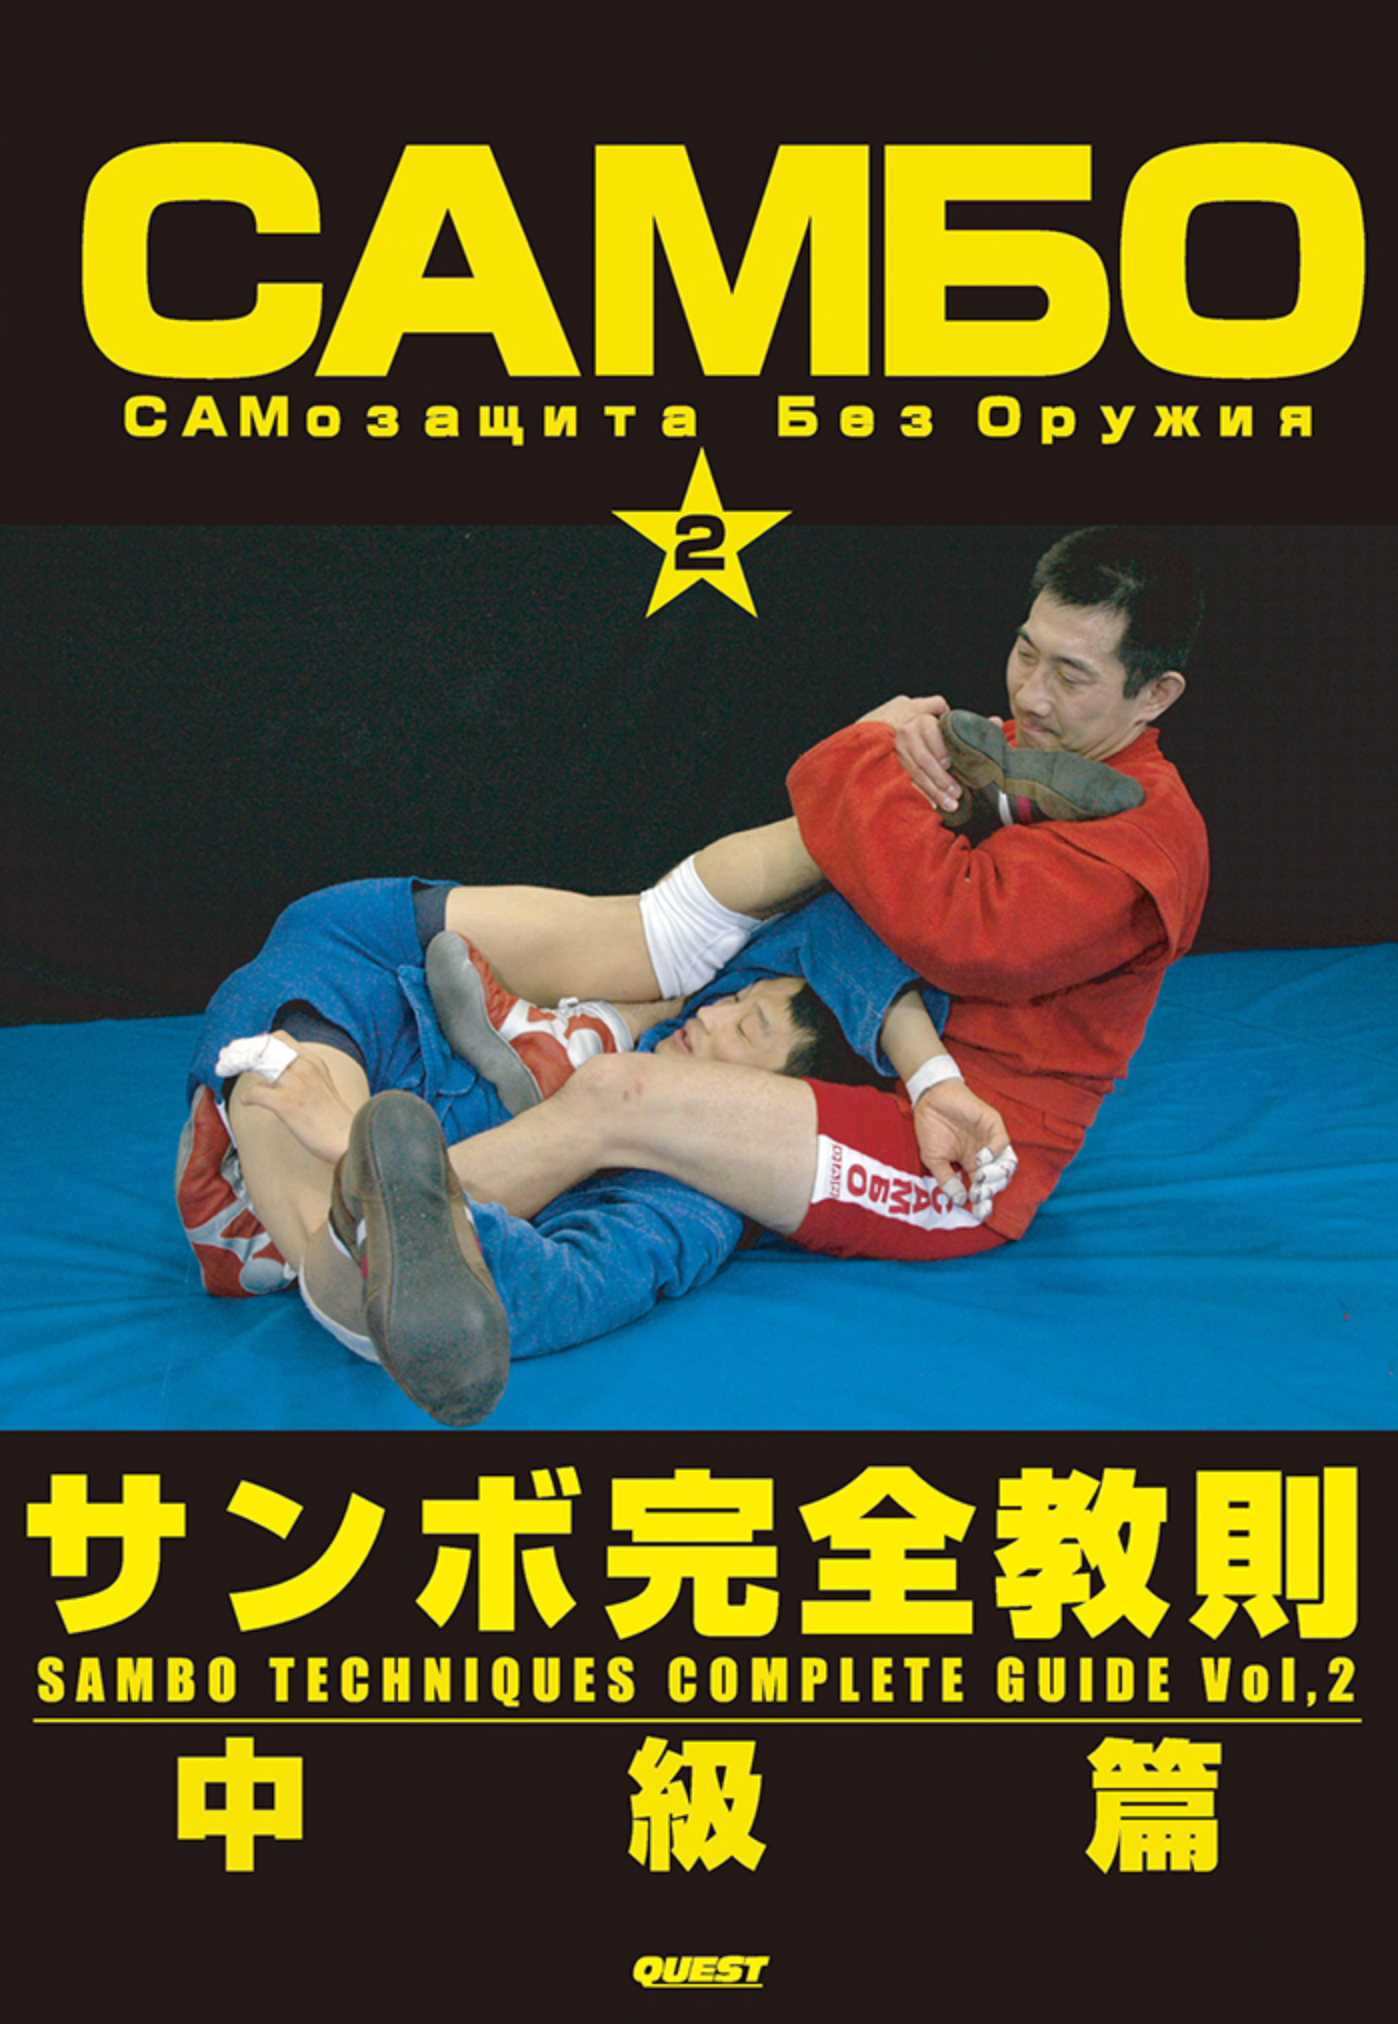 Sambo Techniques Complete Guide Vol 2 DVD by Yasuhiro Tanaka - Budovideos Inc